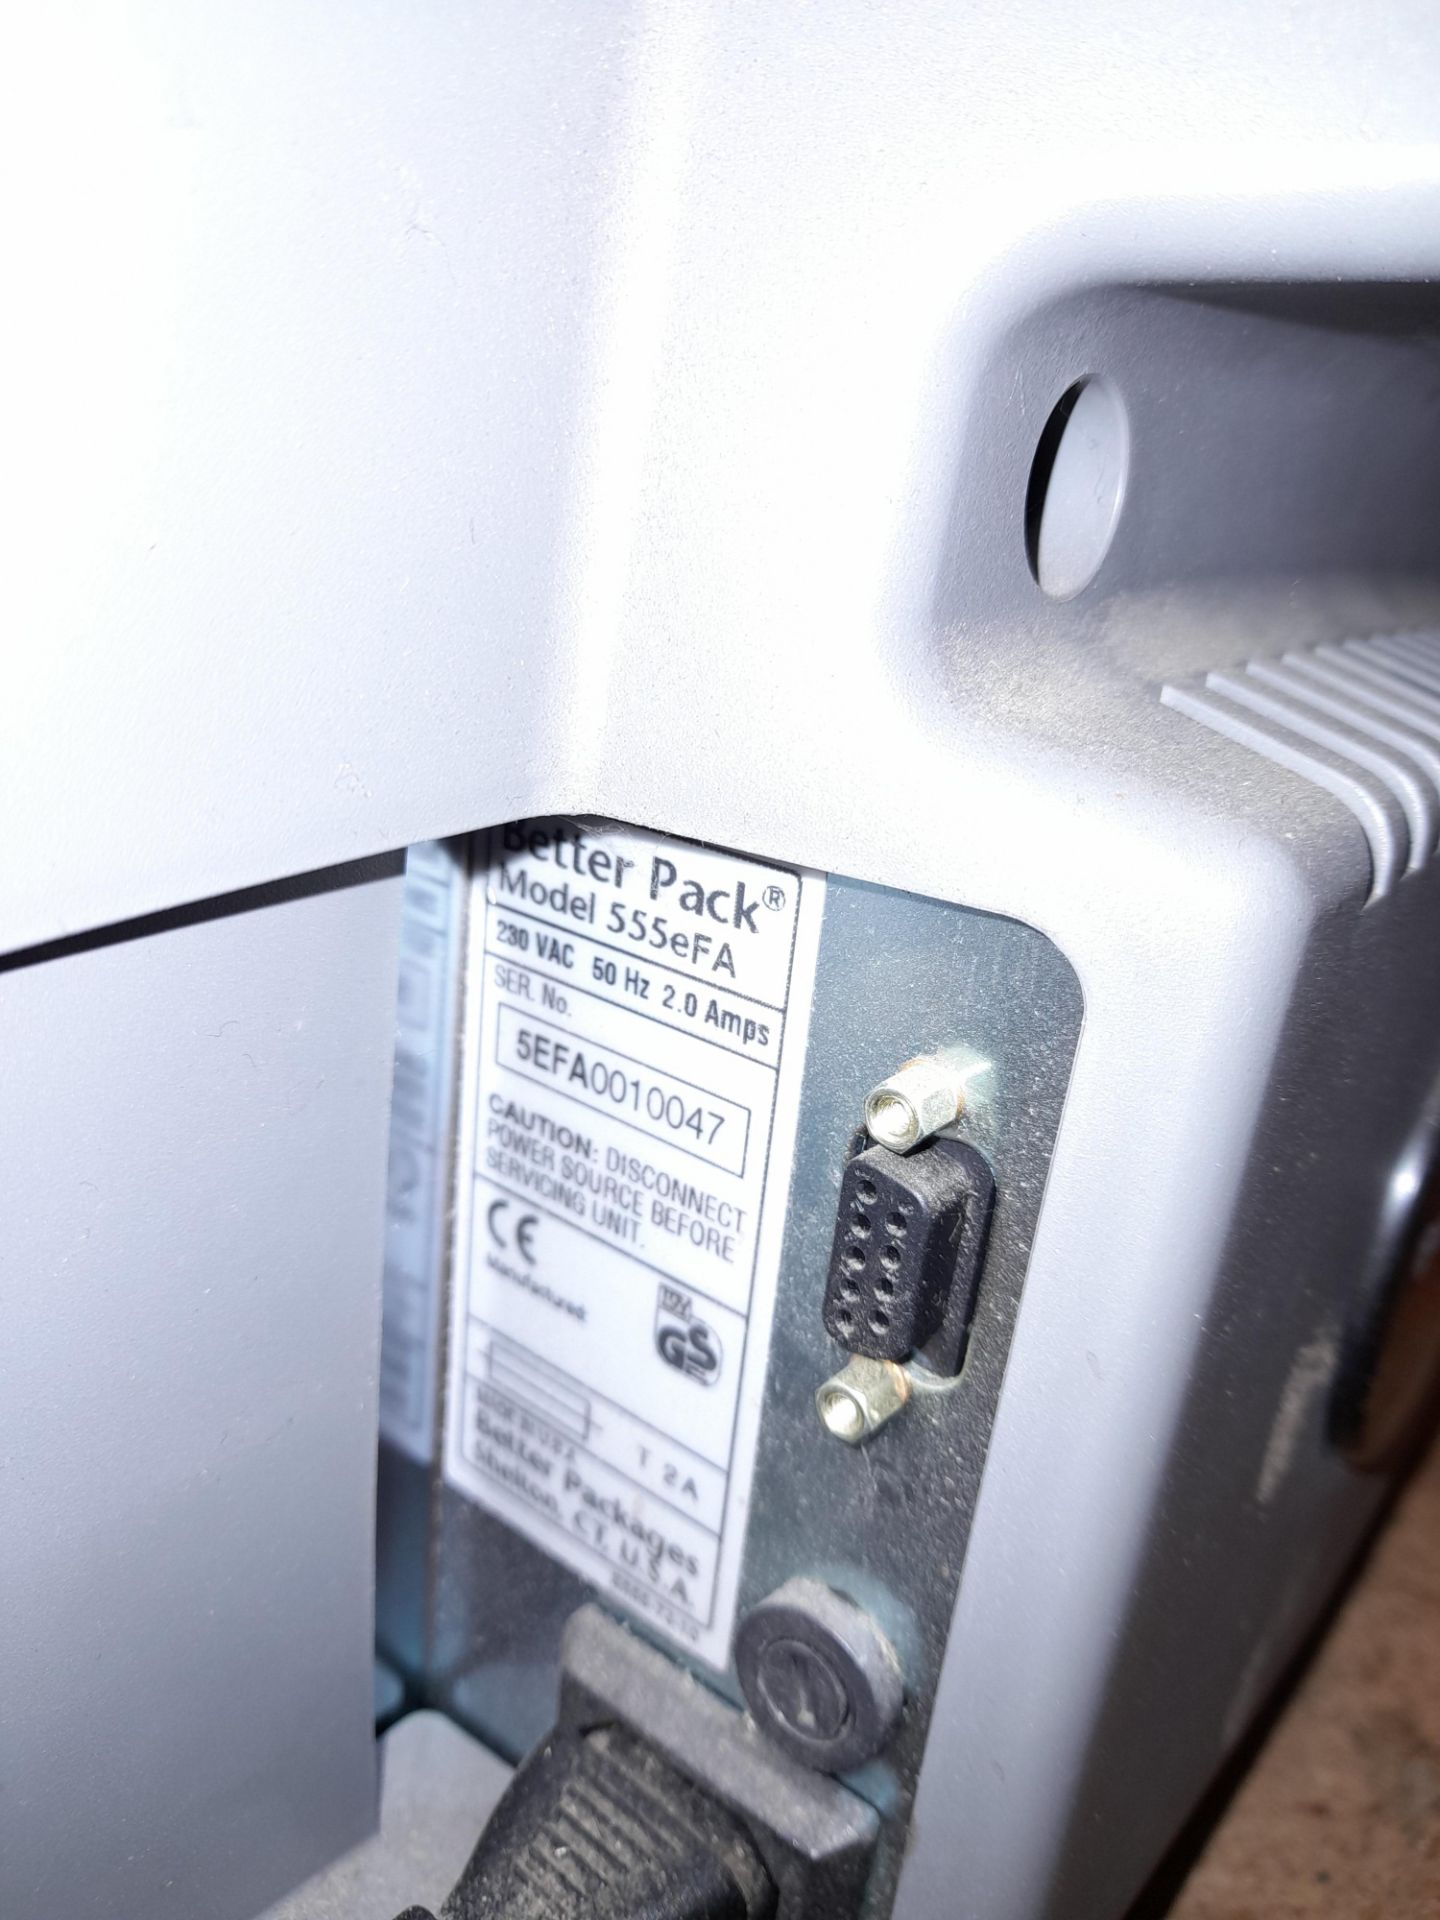 Better Pack 555eFA electric water-activated tape dispenser, Serial Number SEFA0010047 - Image 2 of 2